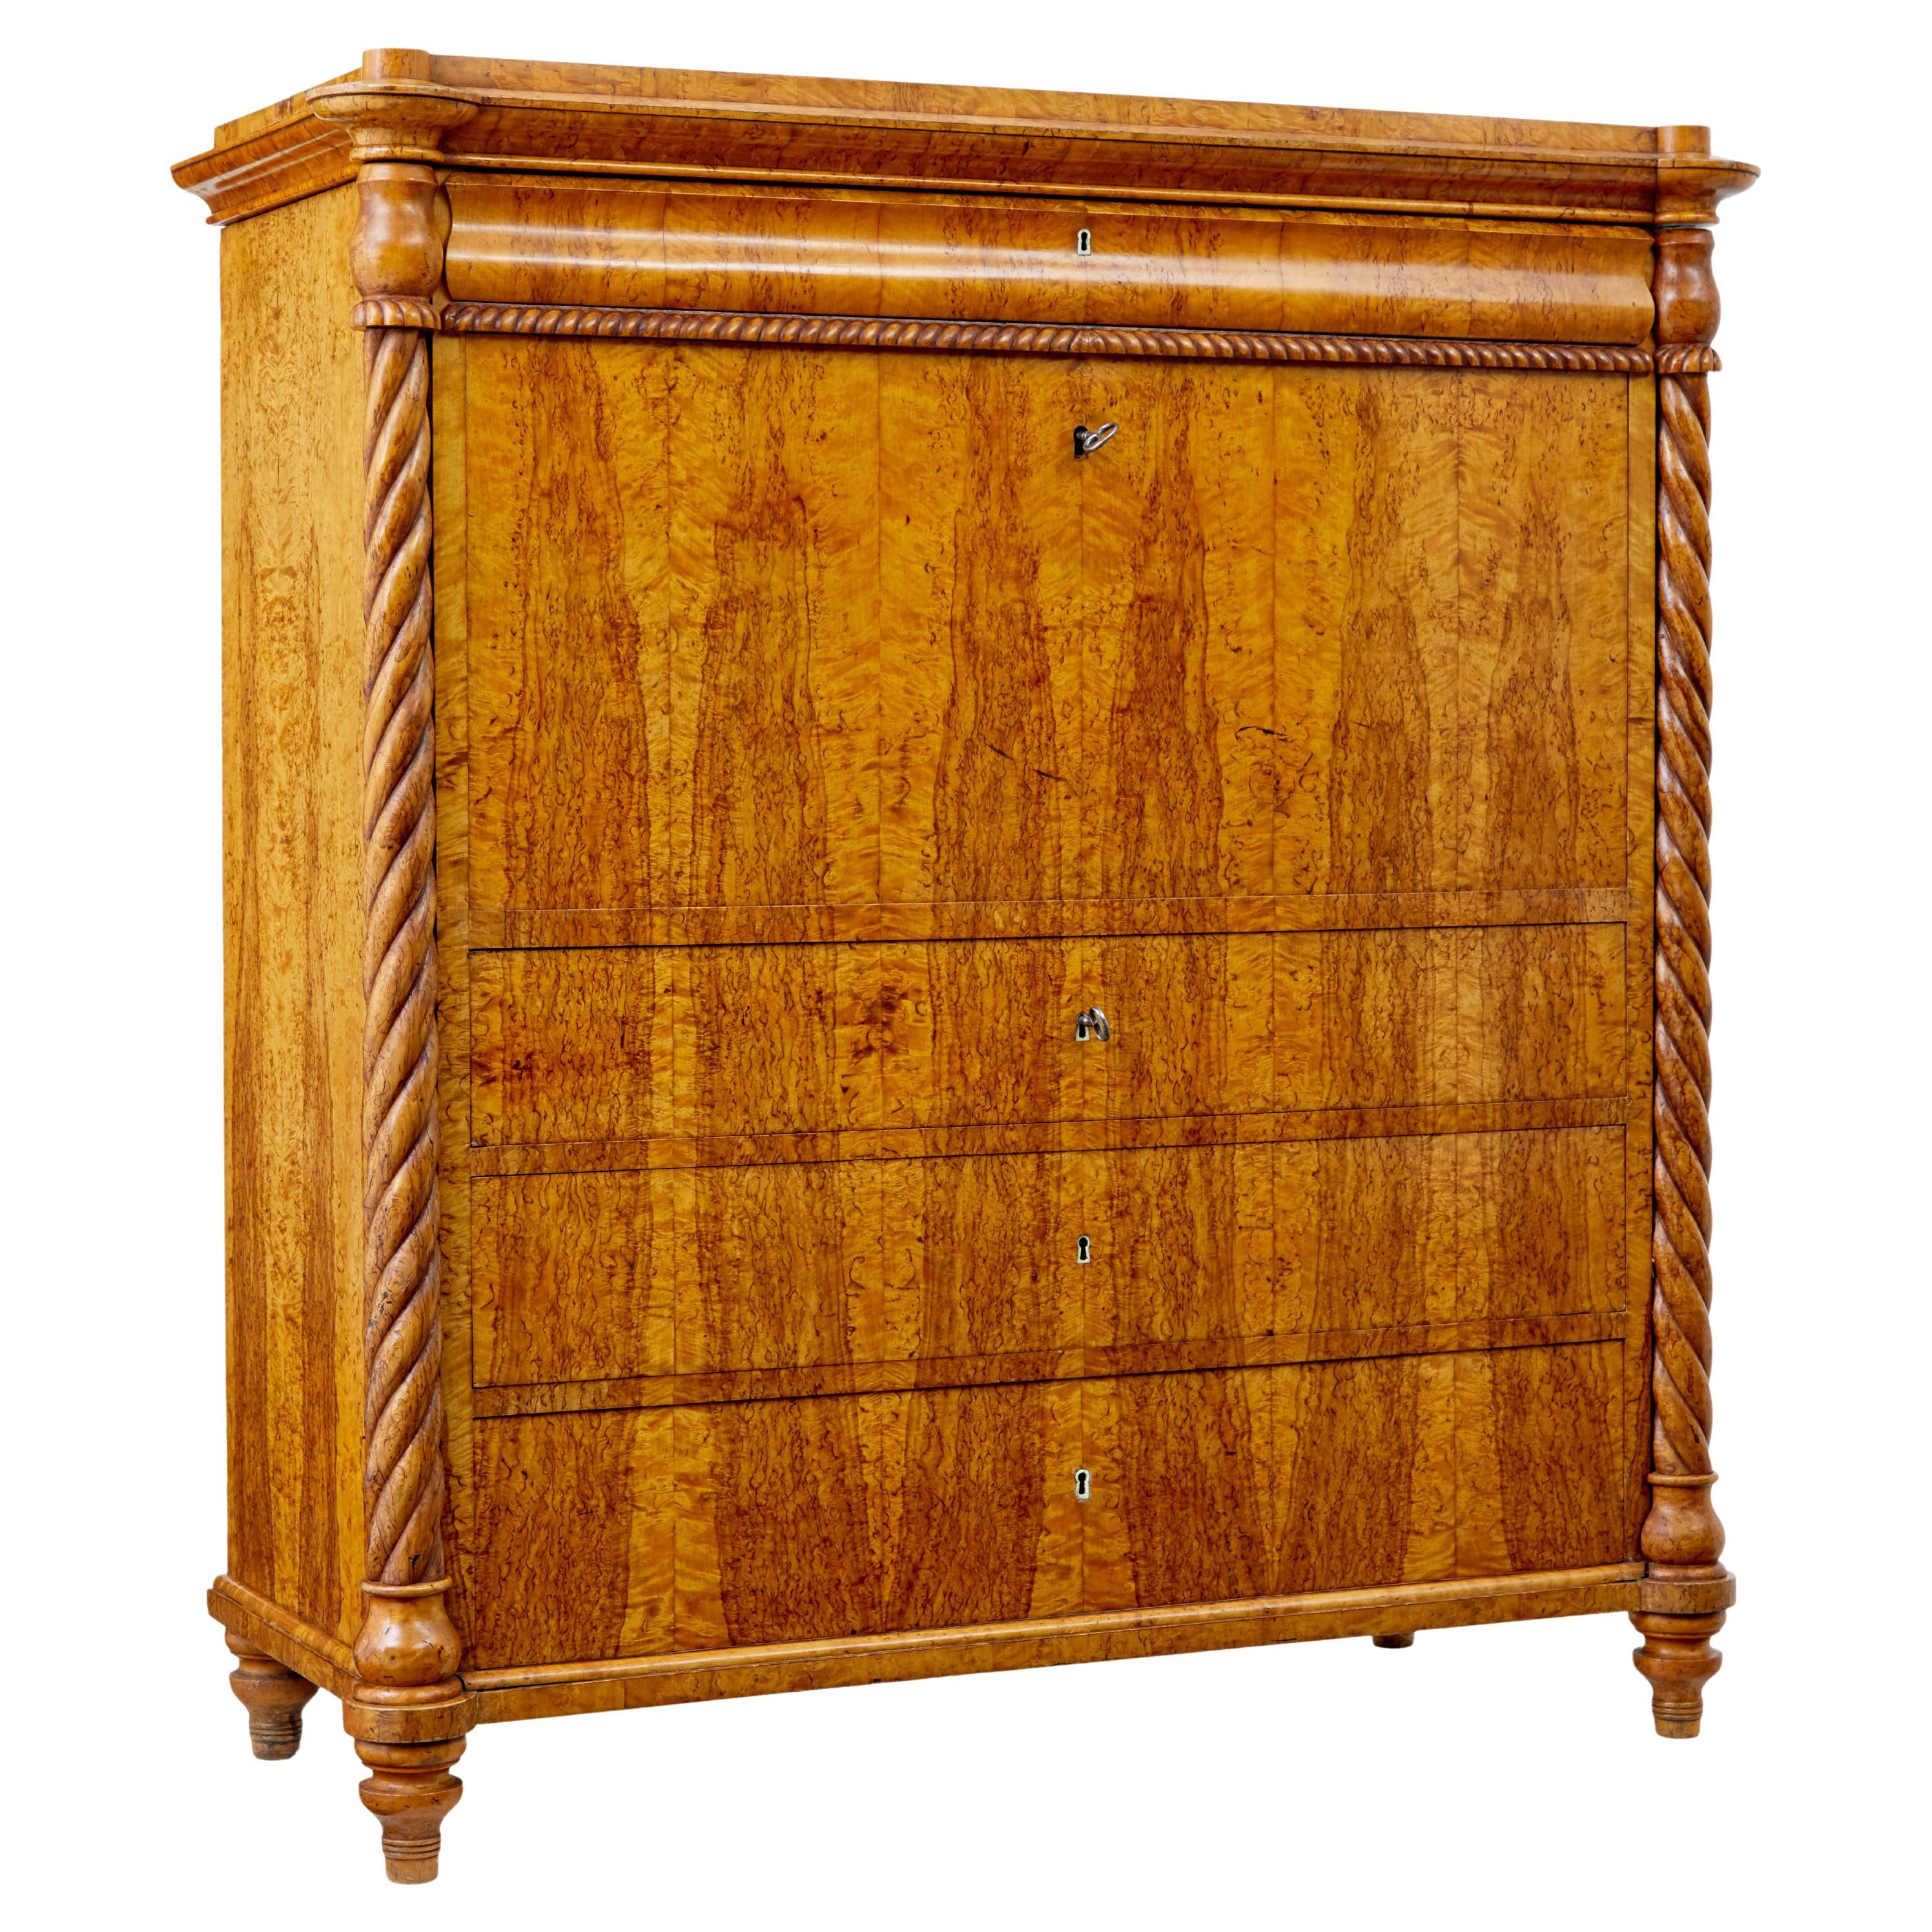 Mid 19th century Swedish burr birch secretaire chest